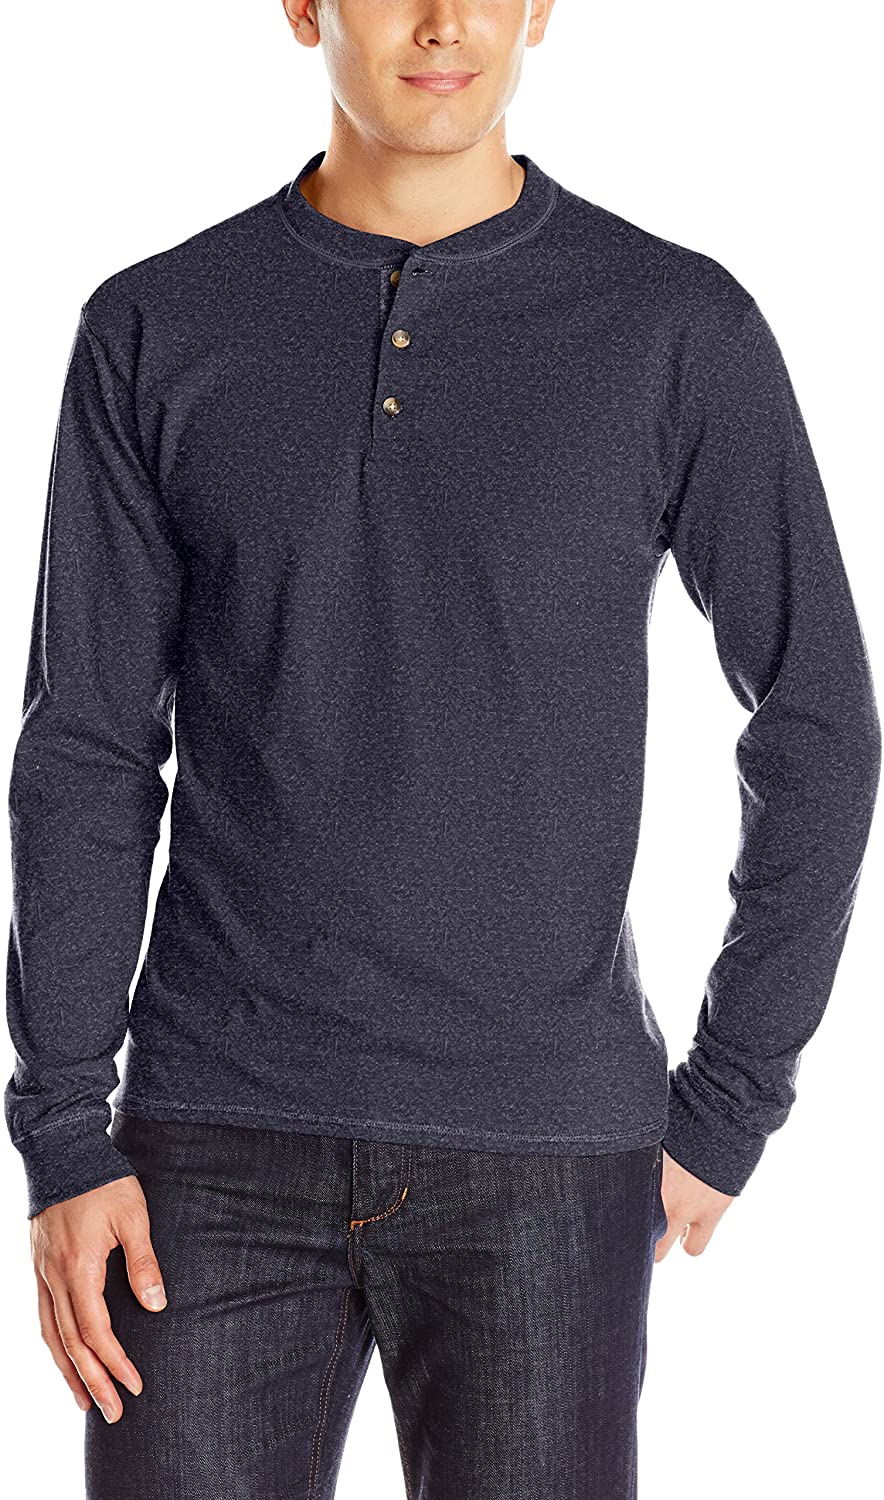 Hanes Men's Long Sleeve Beefy Henley Shirt | eBay